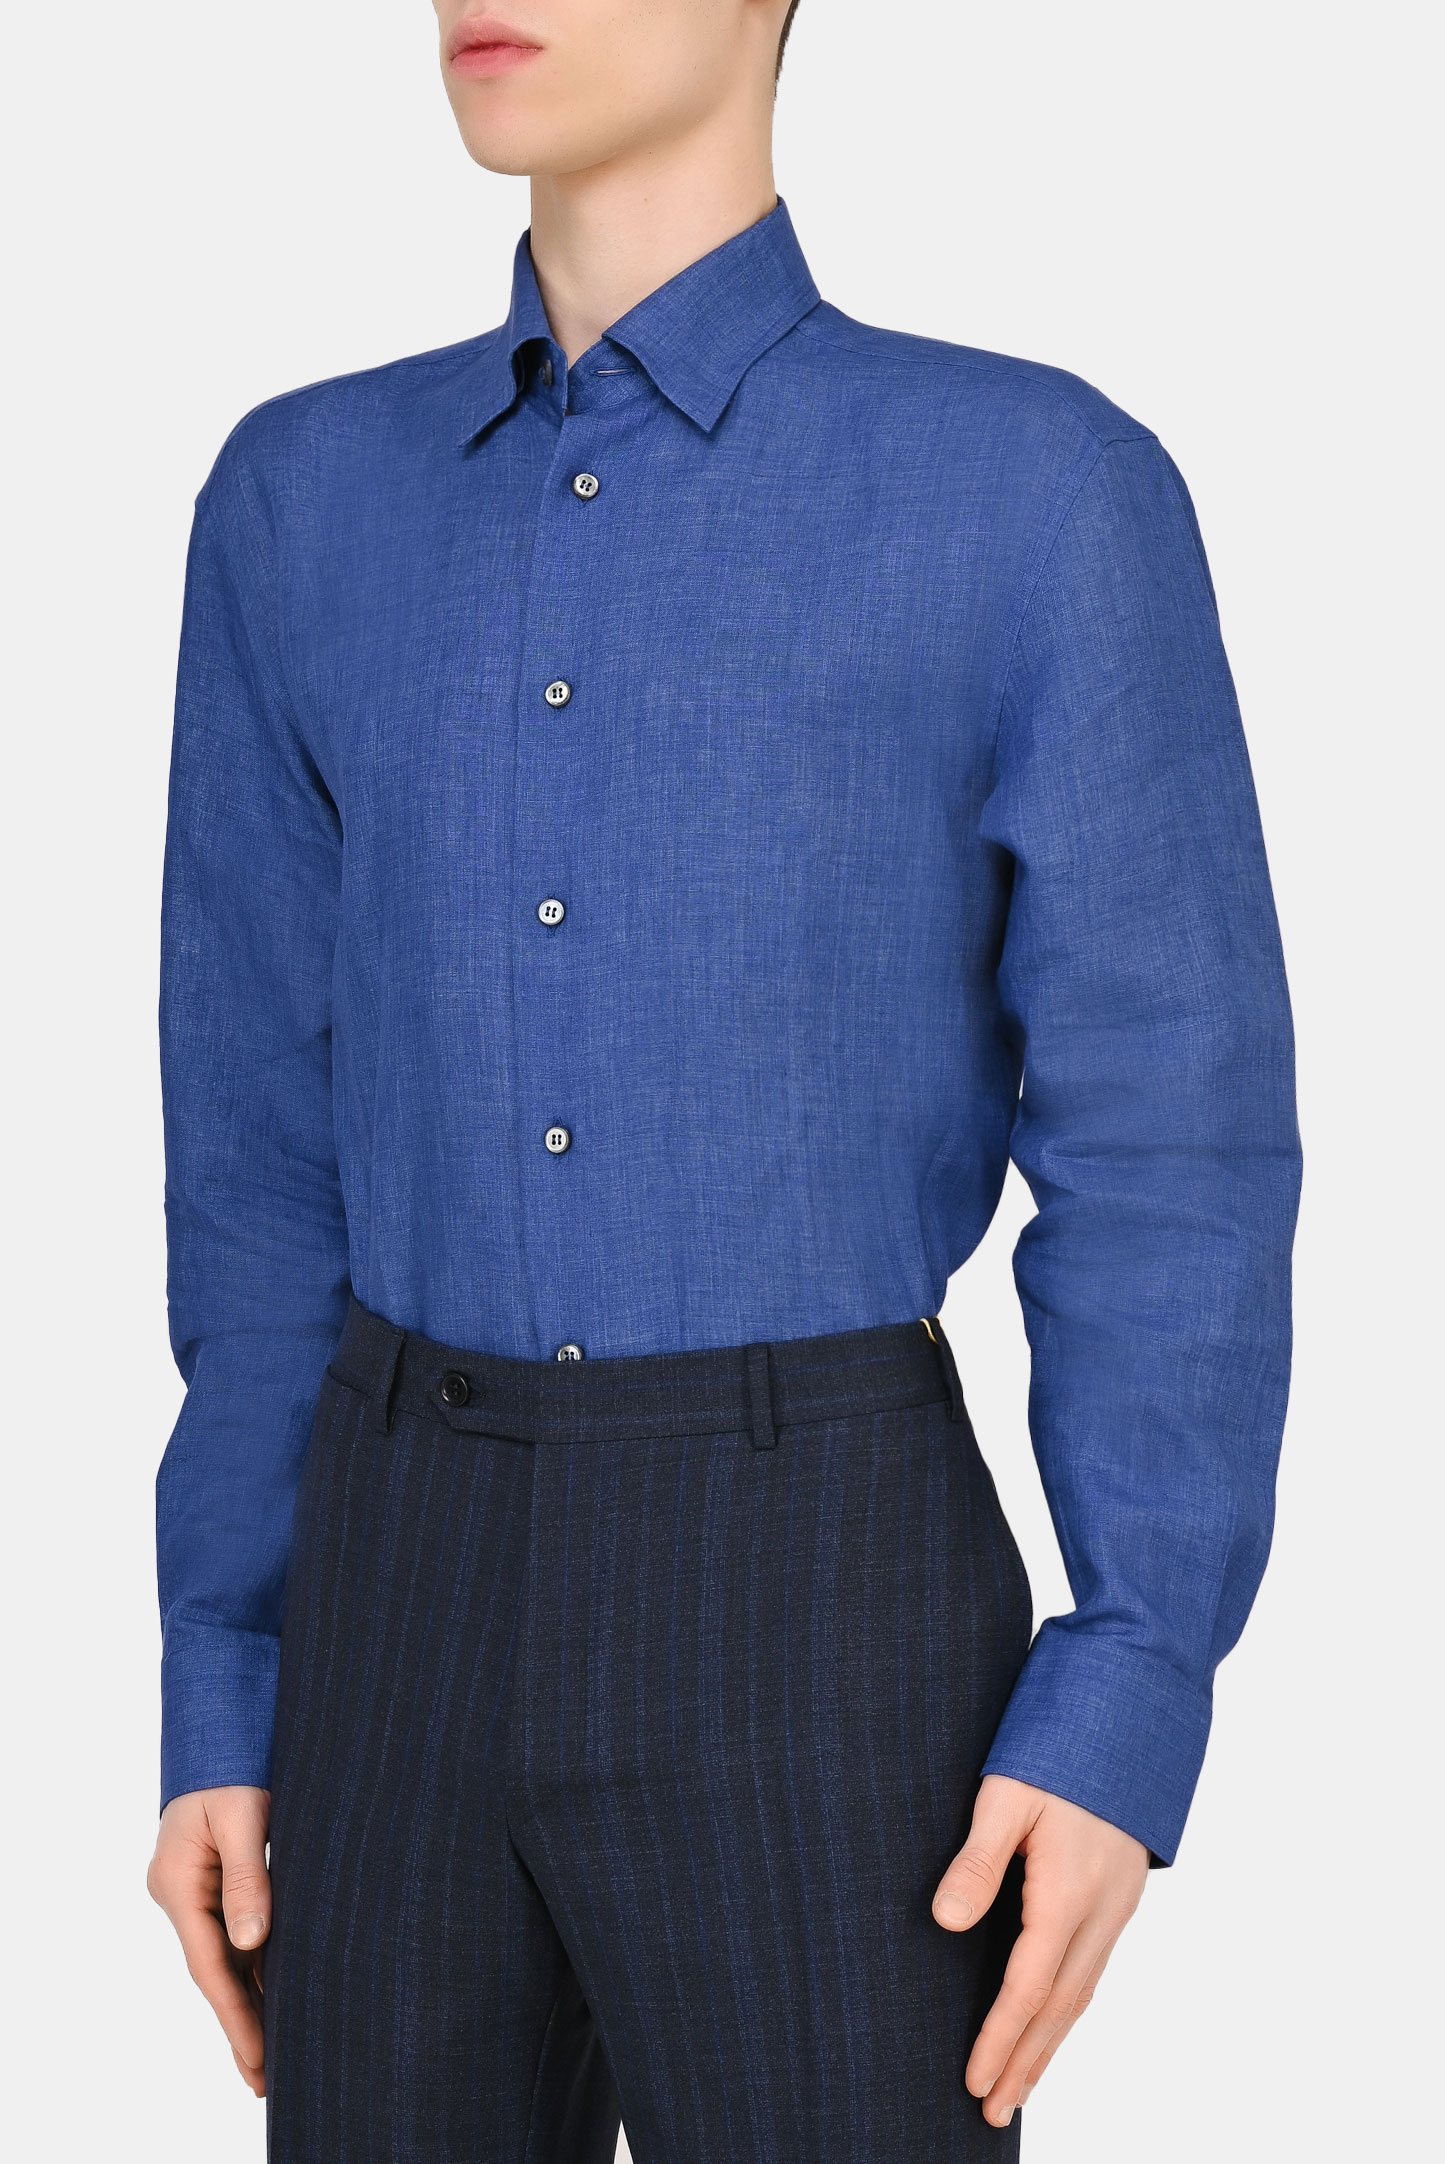 Рубашка BRIONI SCAY0L P9111, цвет: Синий, Мужской